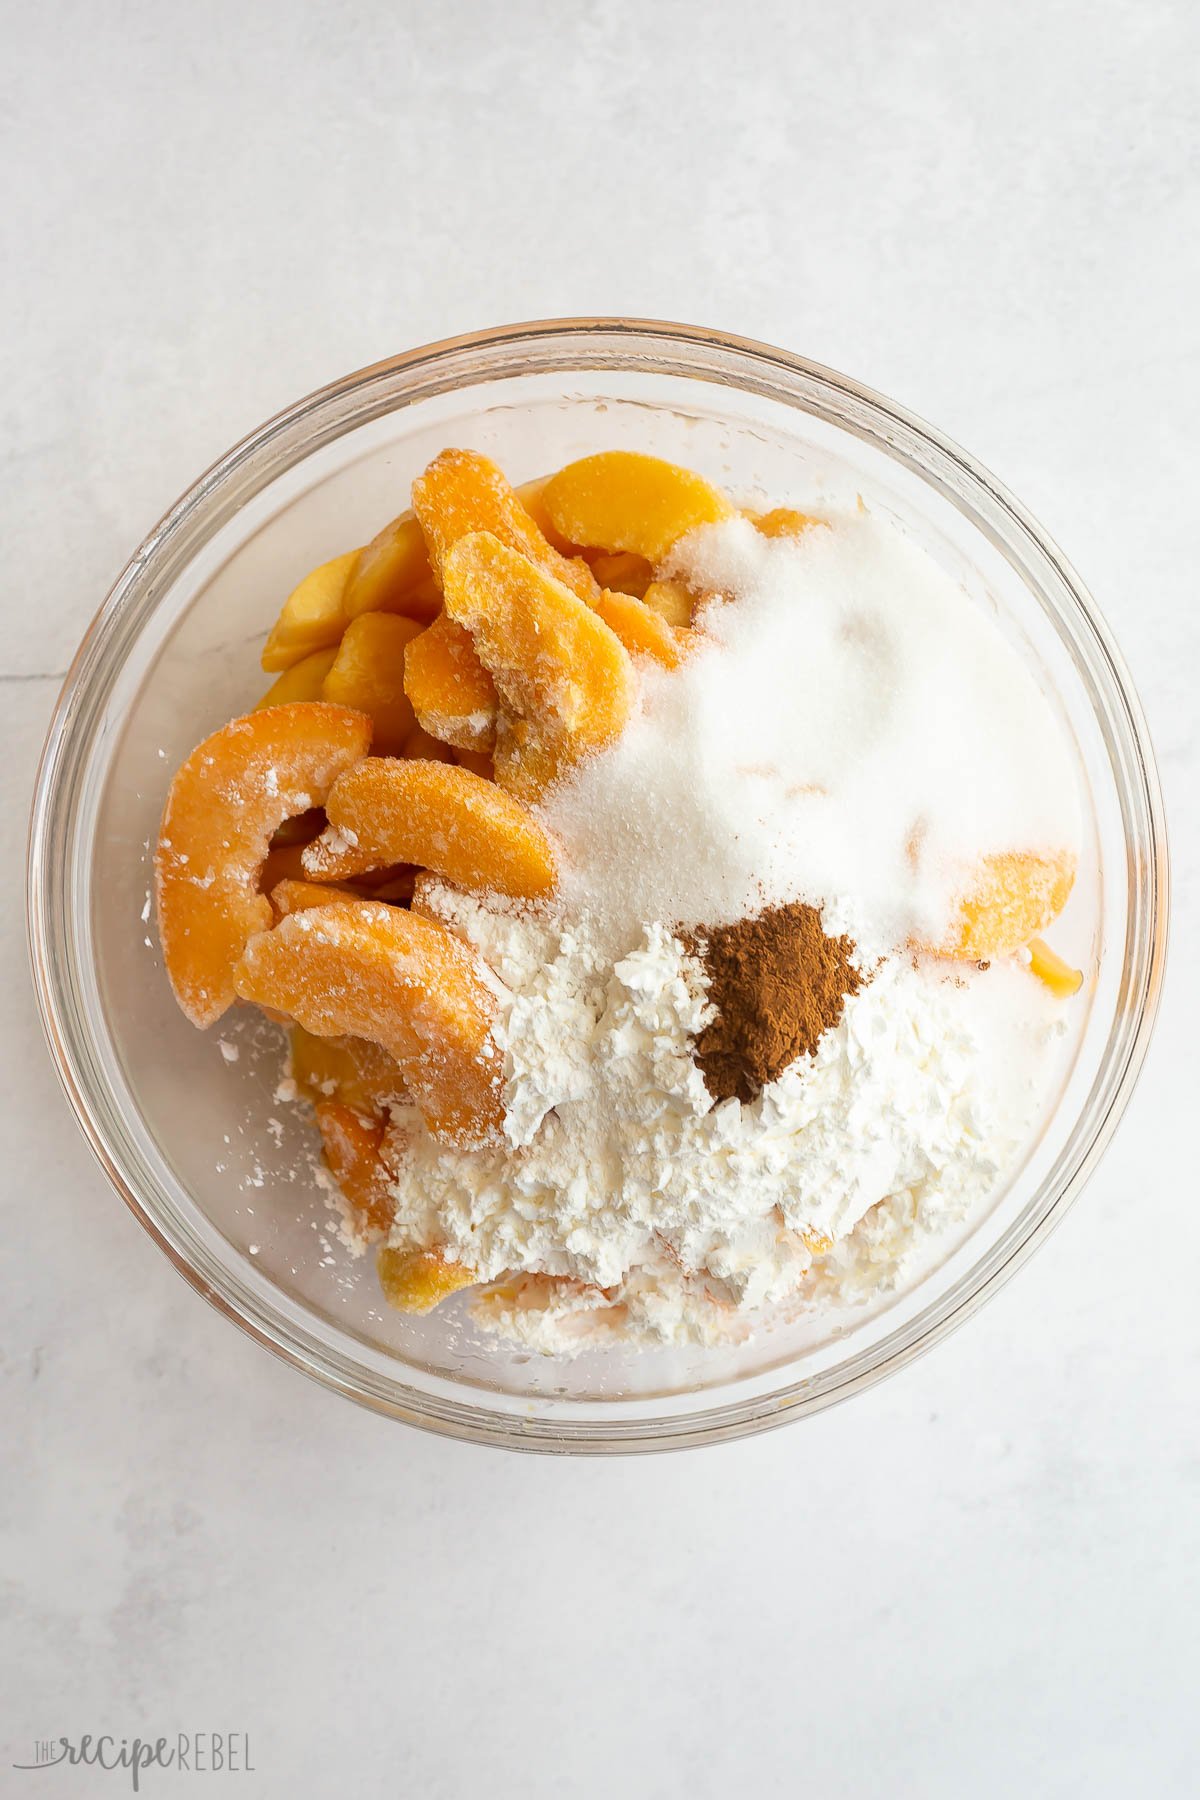 peaches with corn starch sugar and cinnamon in a bowl.